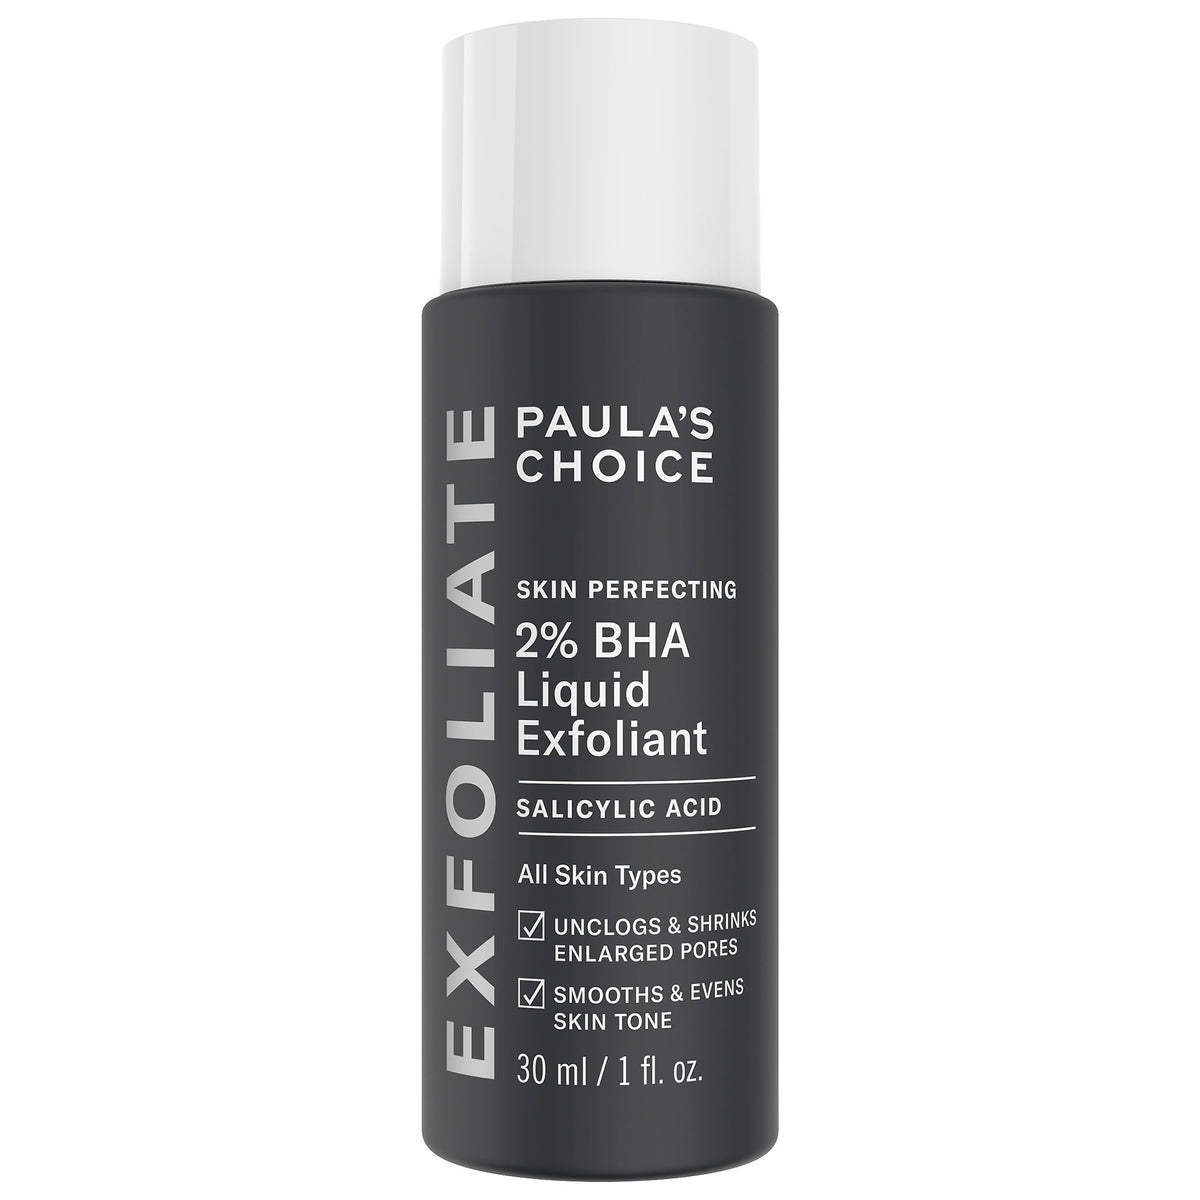 Paula's Choice - Skin Perfecting 2% BHA Liquid Exfoliant